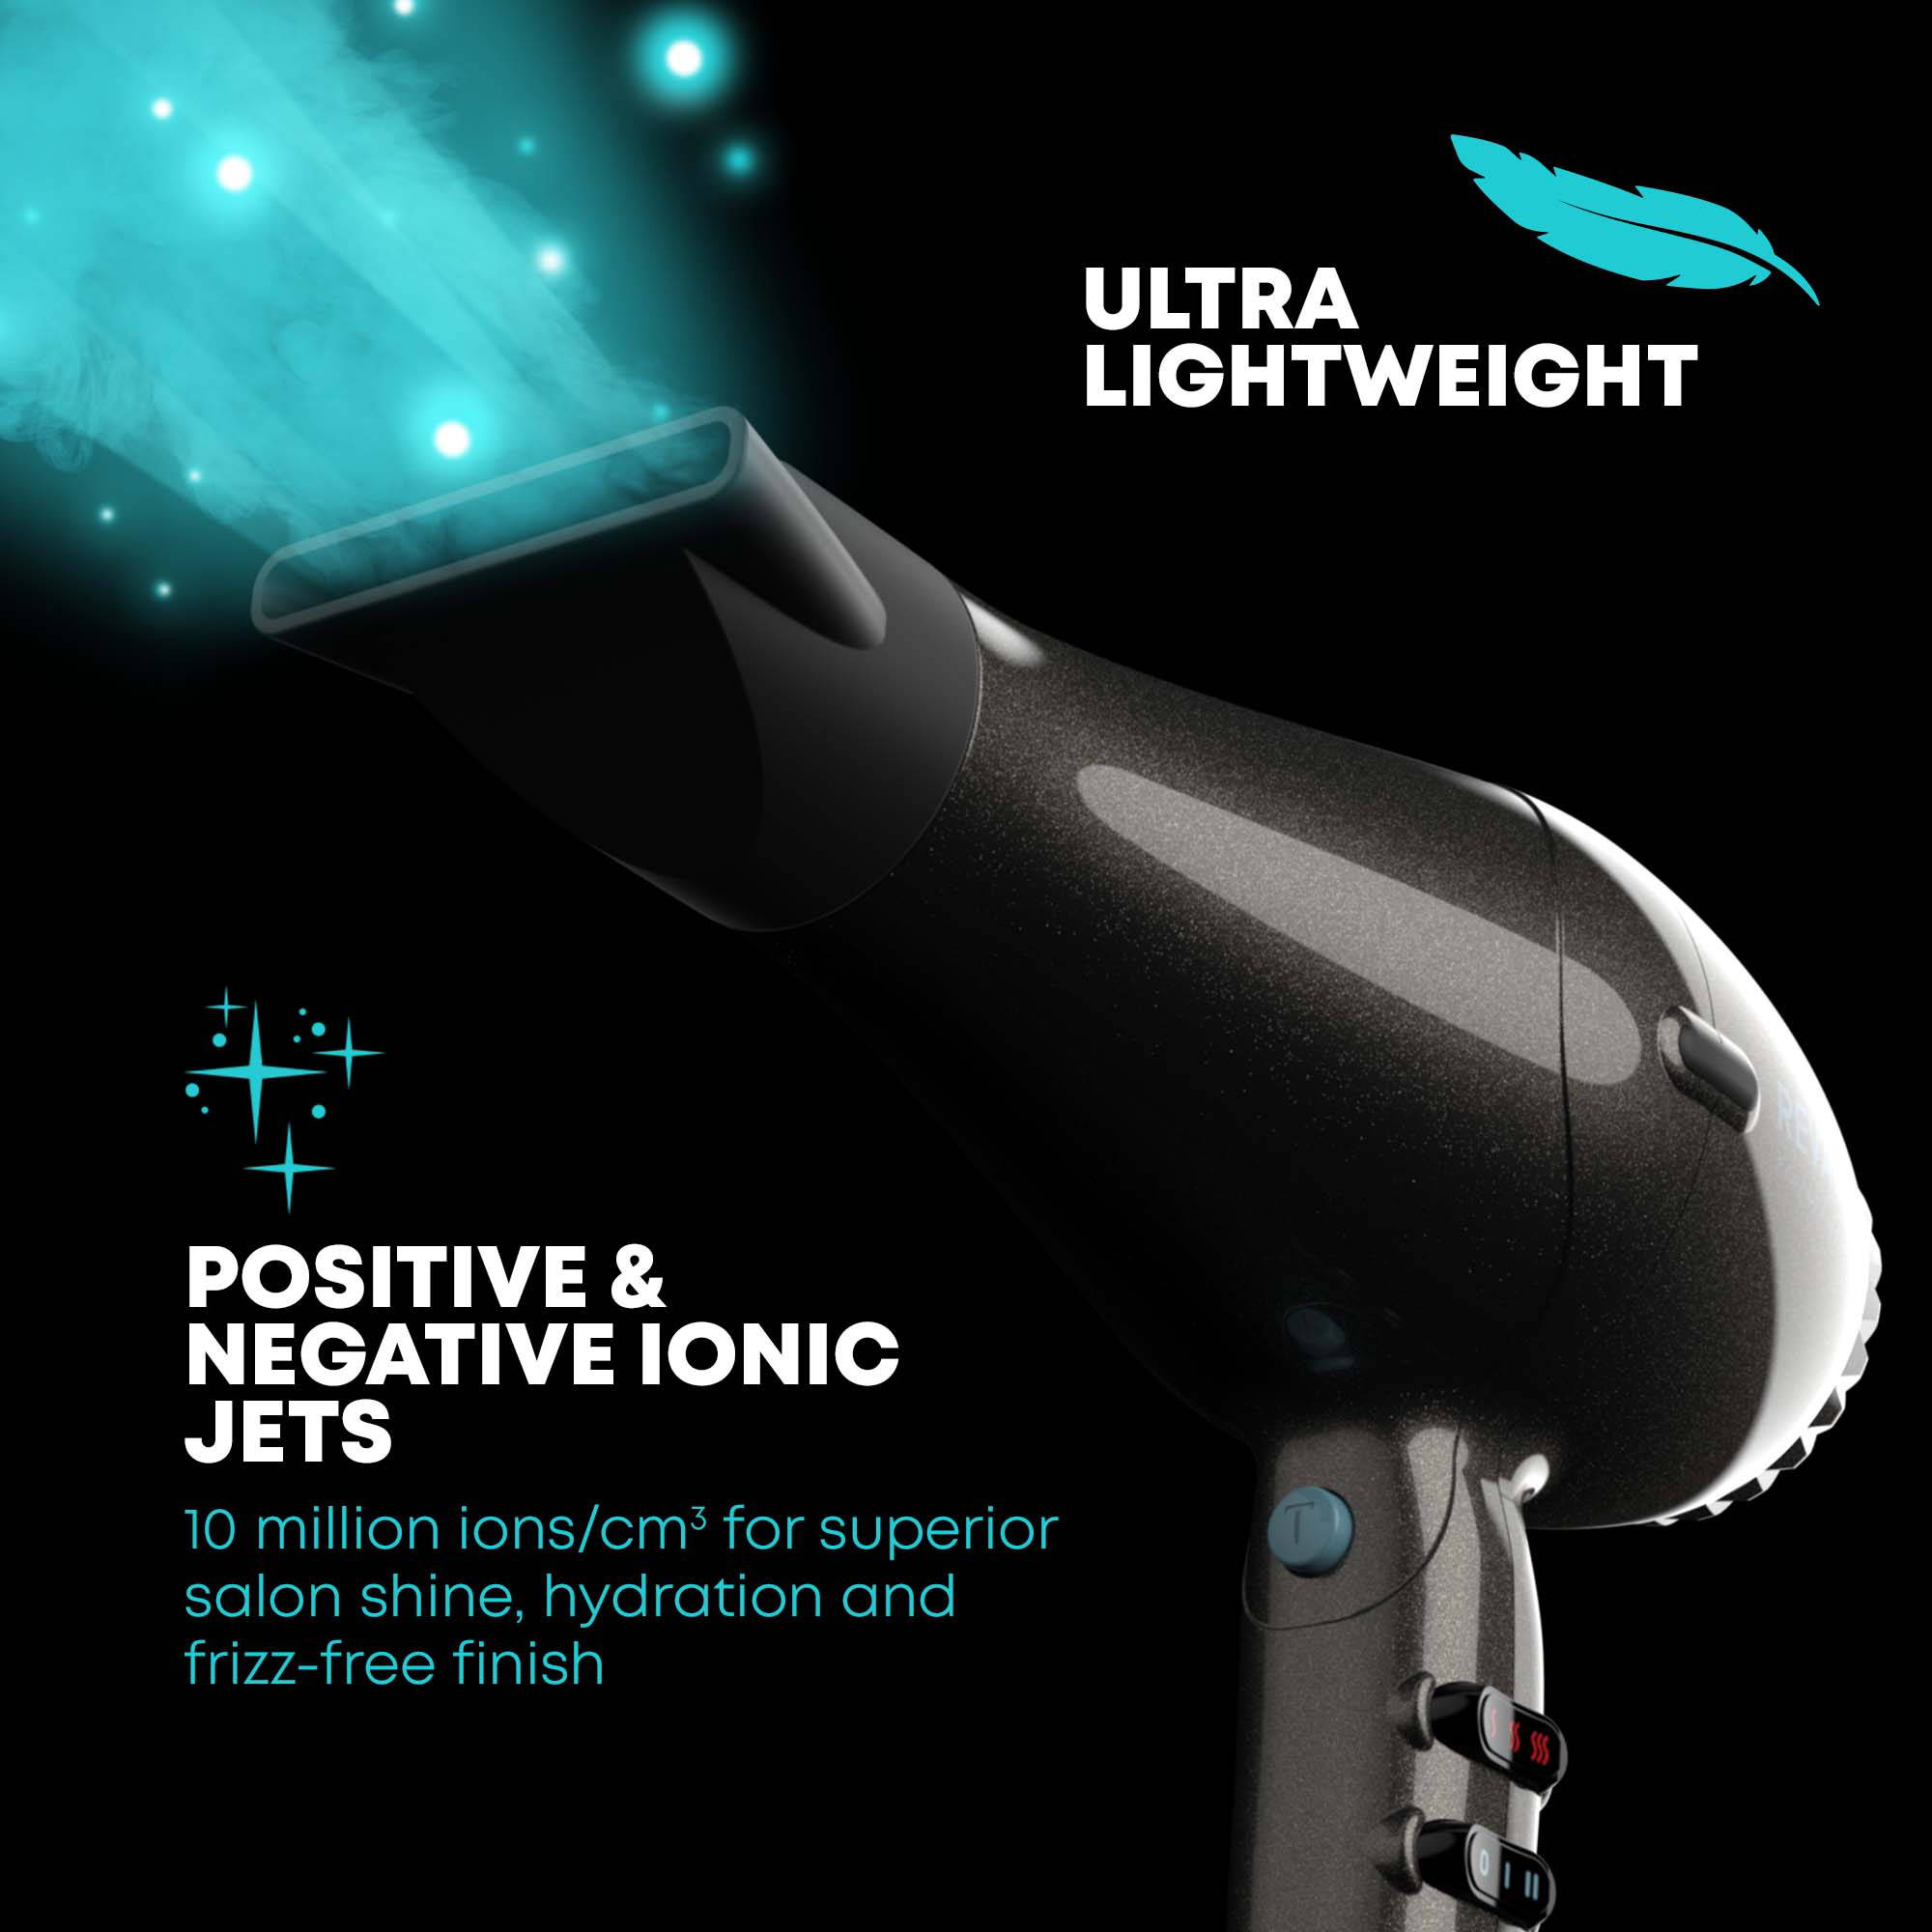 Ionic Jet Technology